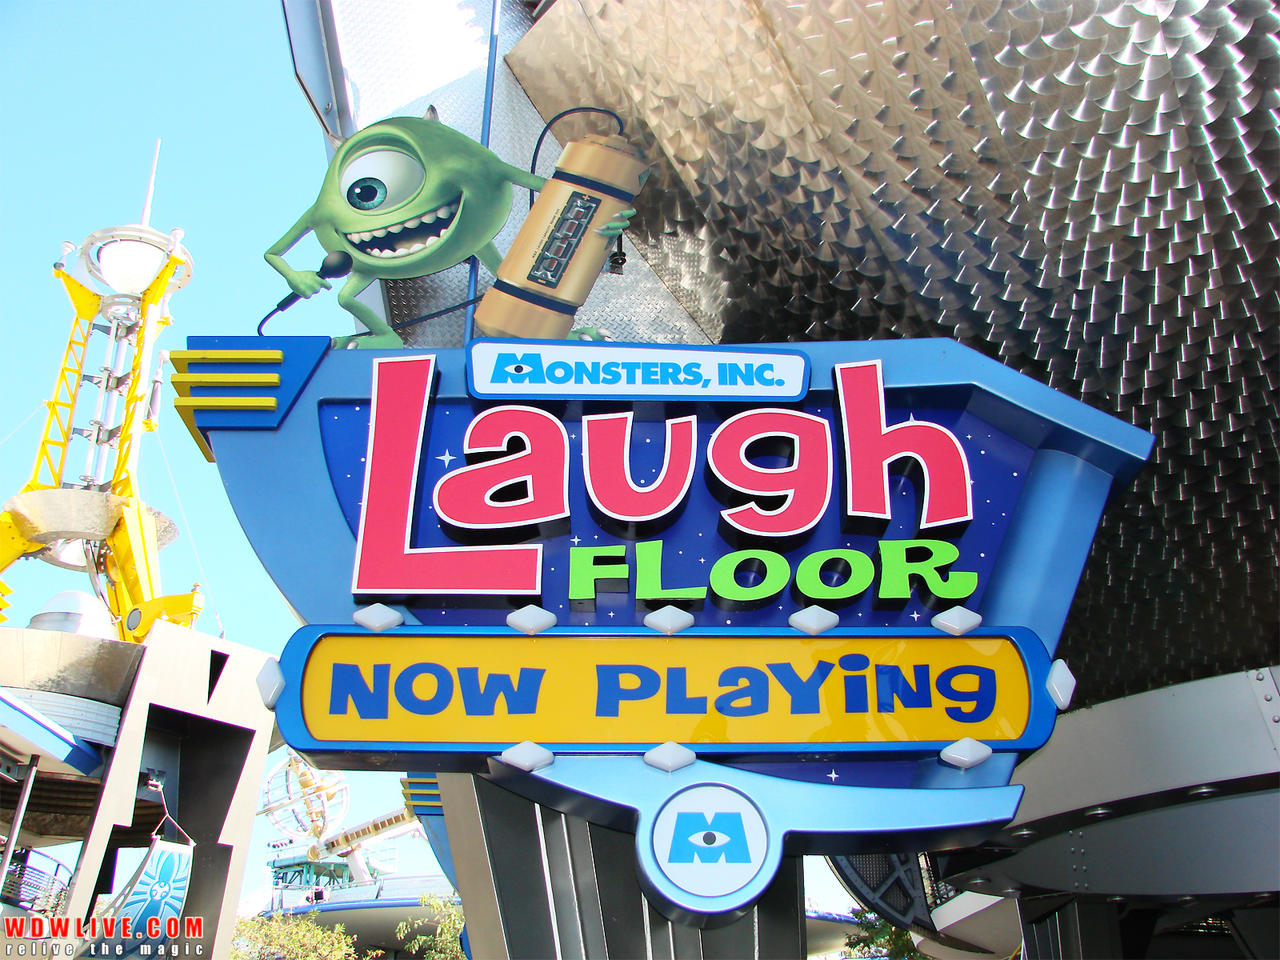 Monster Inc. Laugh Floor, Monsters, Inc. Laugh Floor is an …